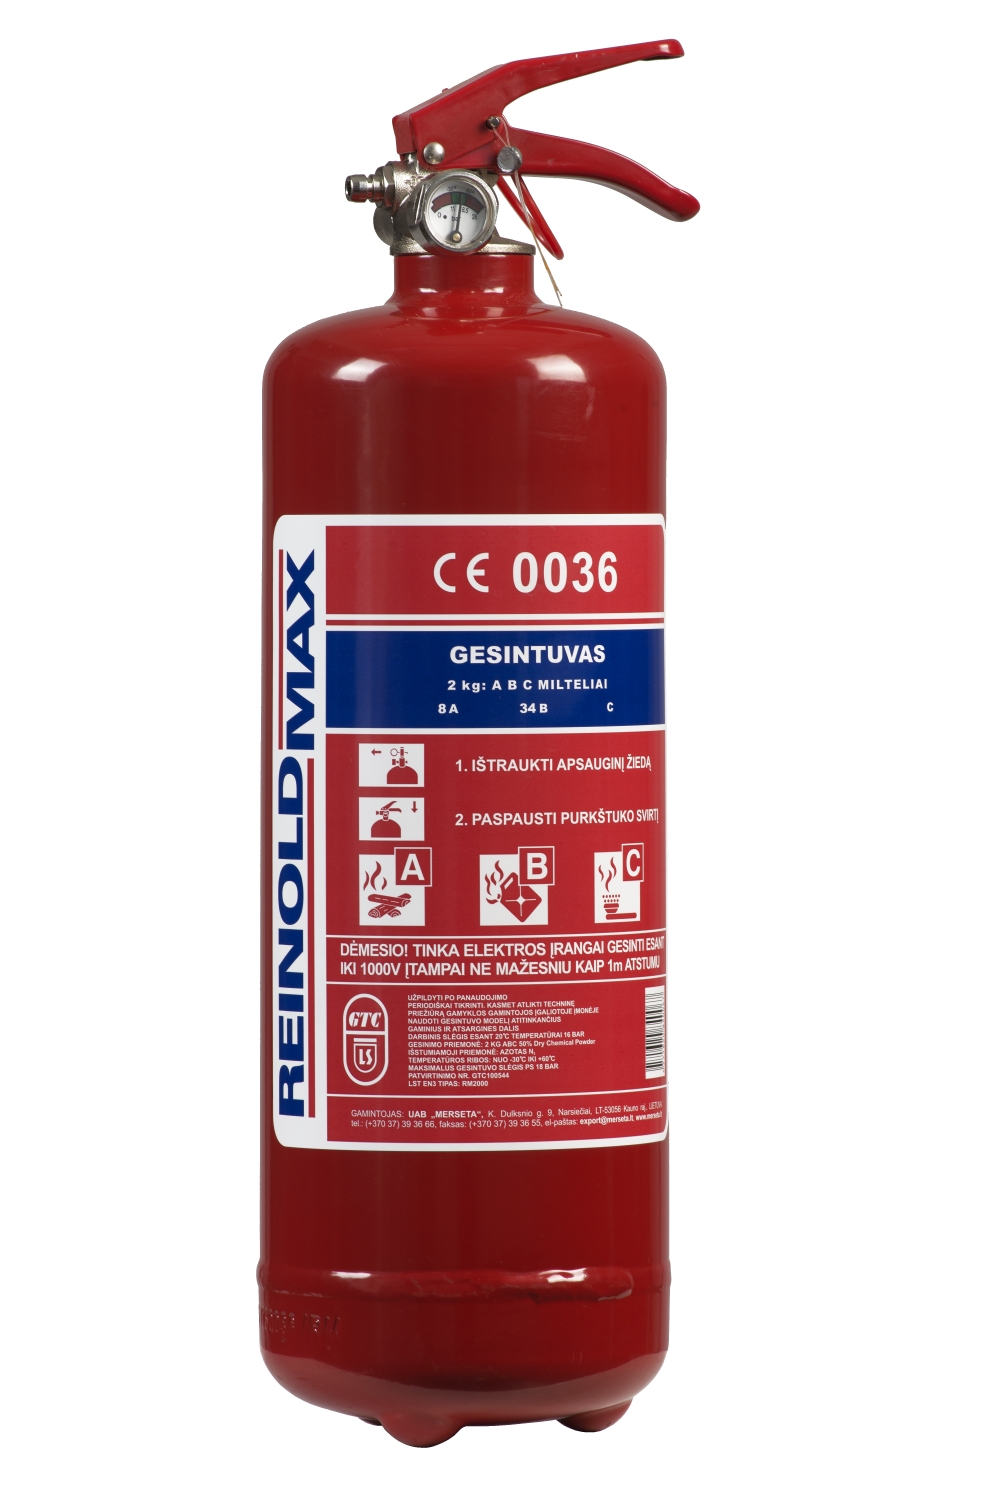 Dry Powder Fire Extinguisher 2 kg - Merseta